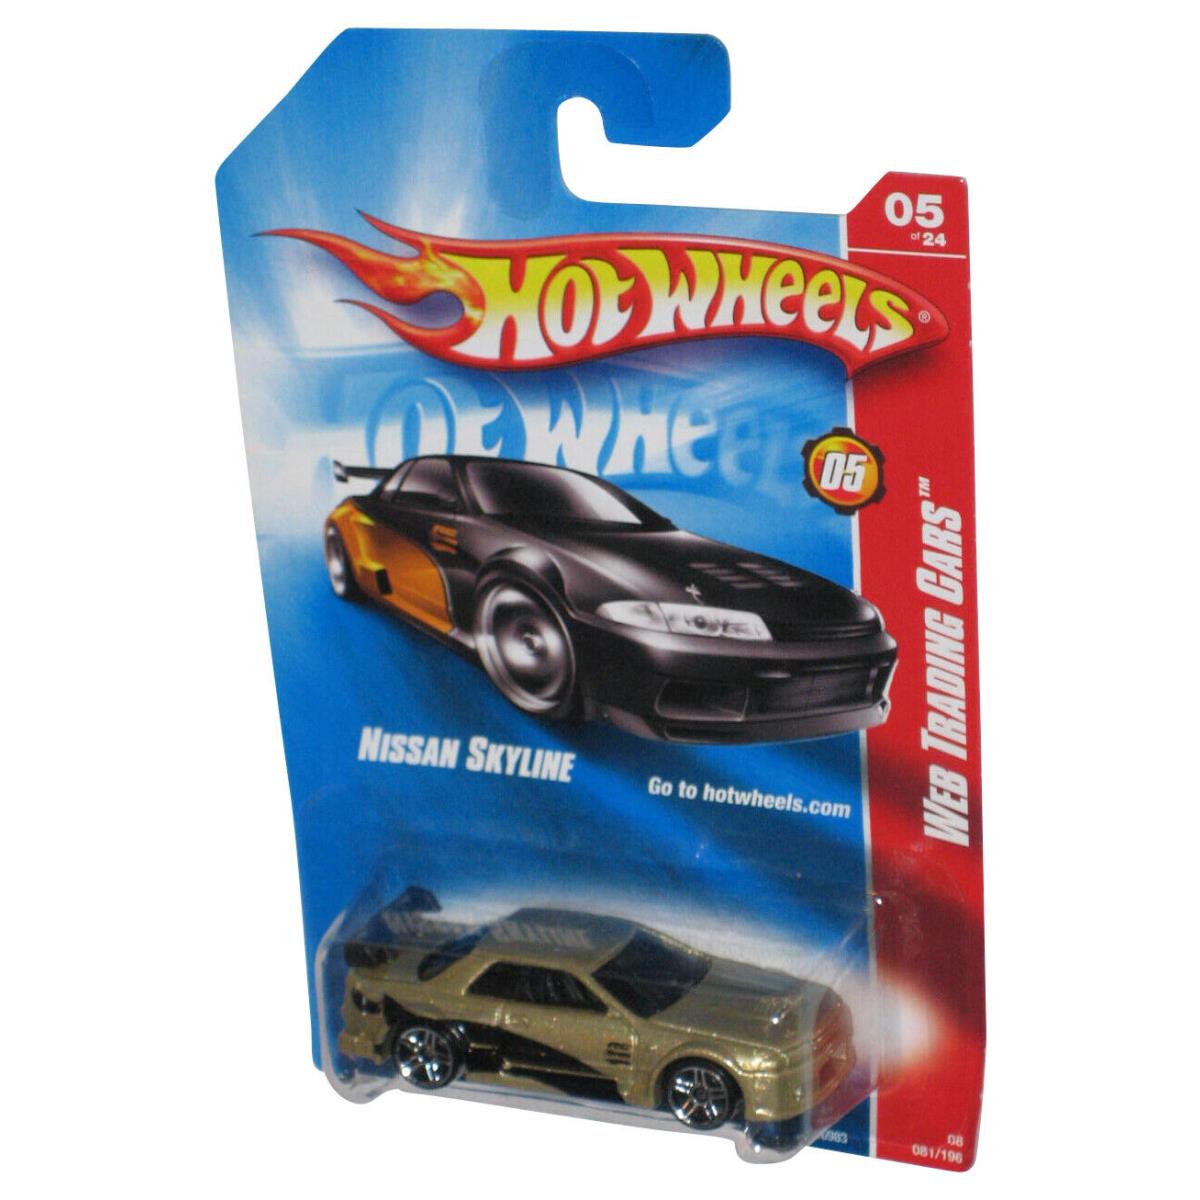 Hot Wheels Web Trading Cars 5/24 2007 Nissan Skyline Gold Toy Car 081/196